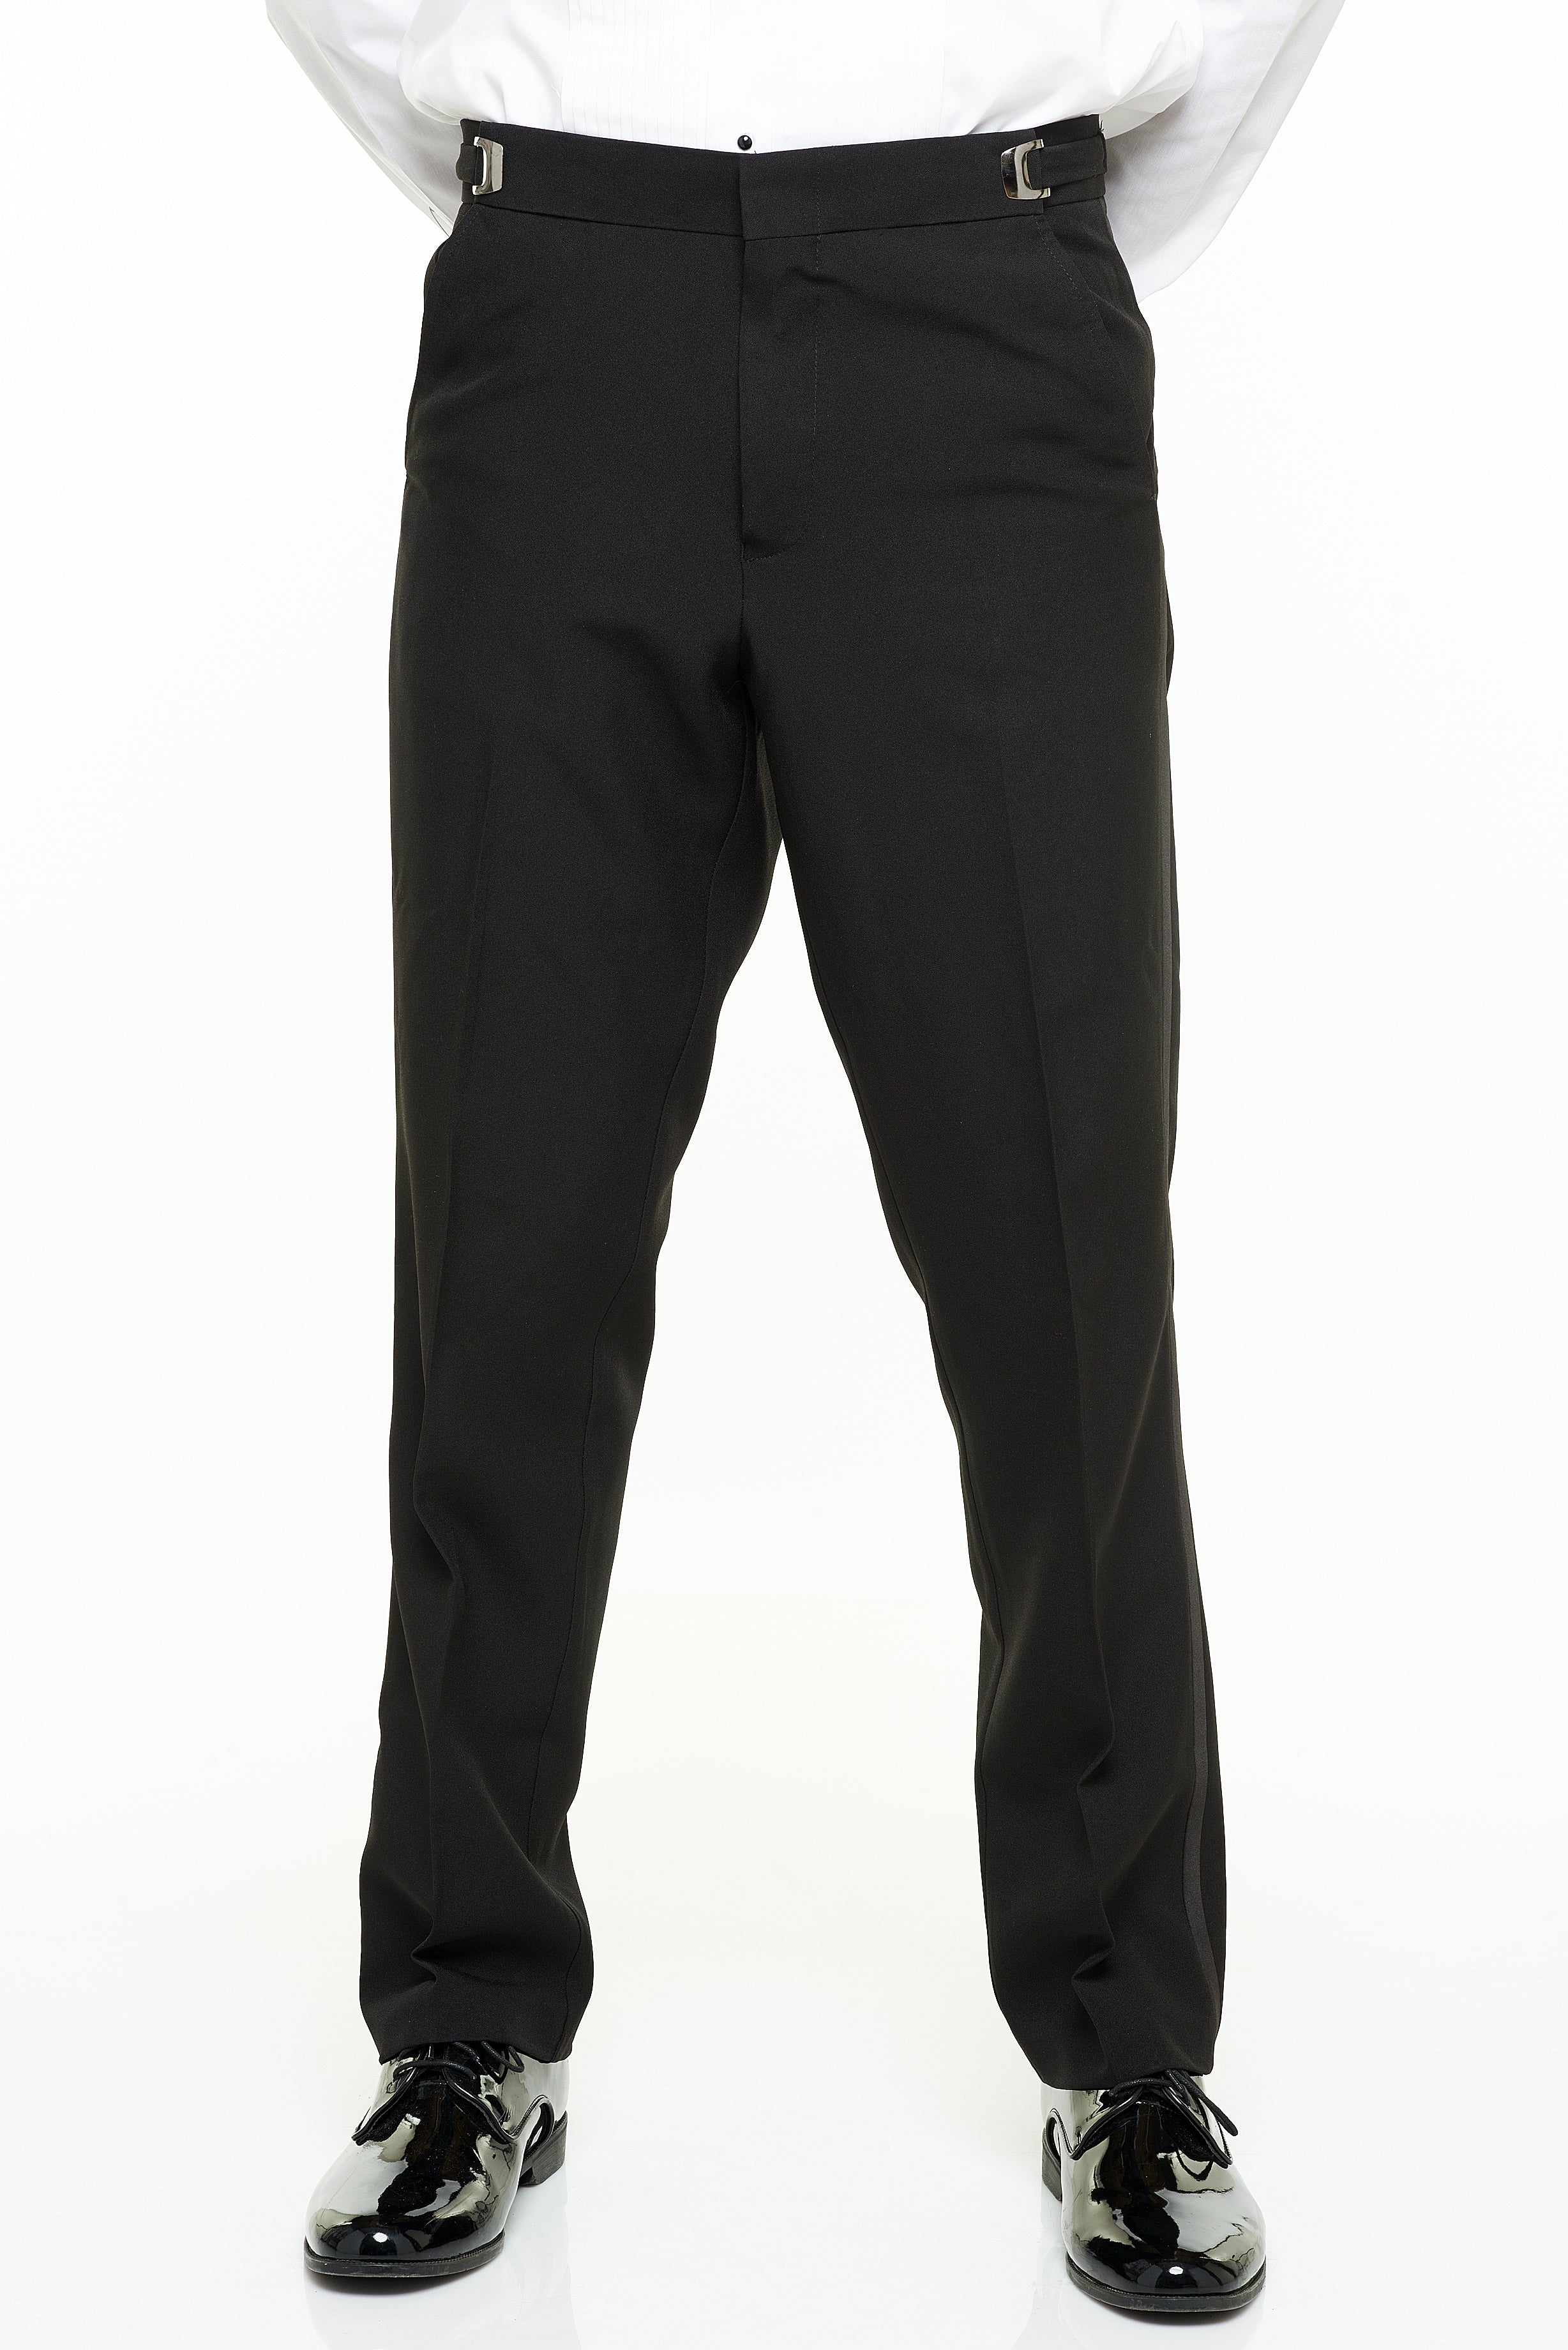 J.Ferrar Super Slim Black Flat Front Polyester Blend Mens Dress Pants 34 x  32 | eBay